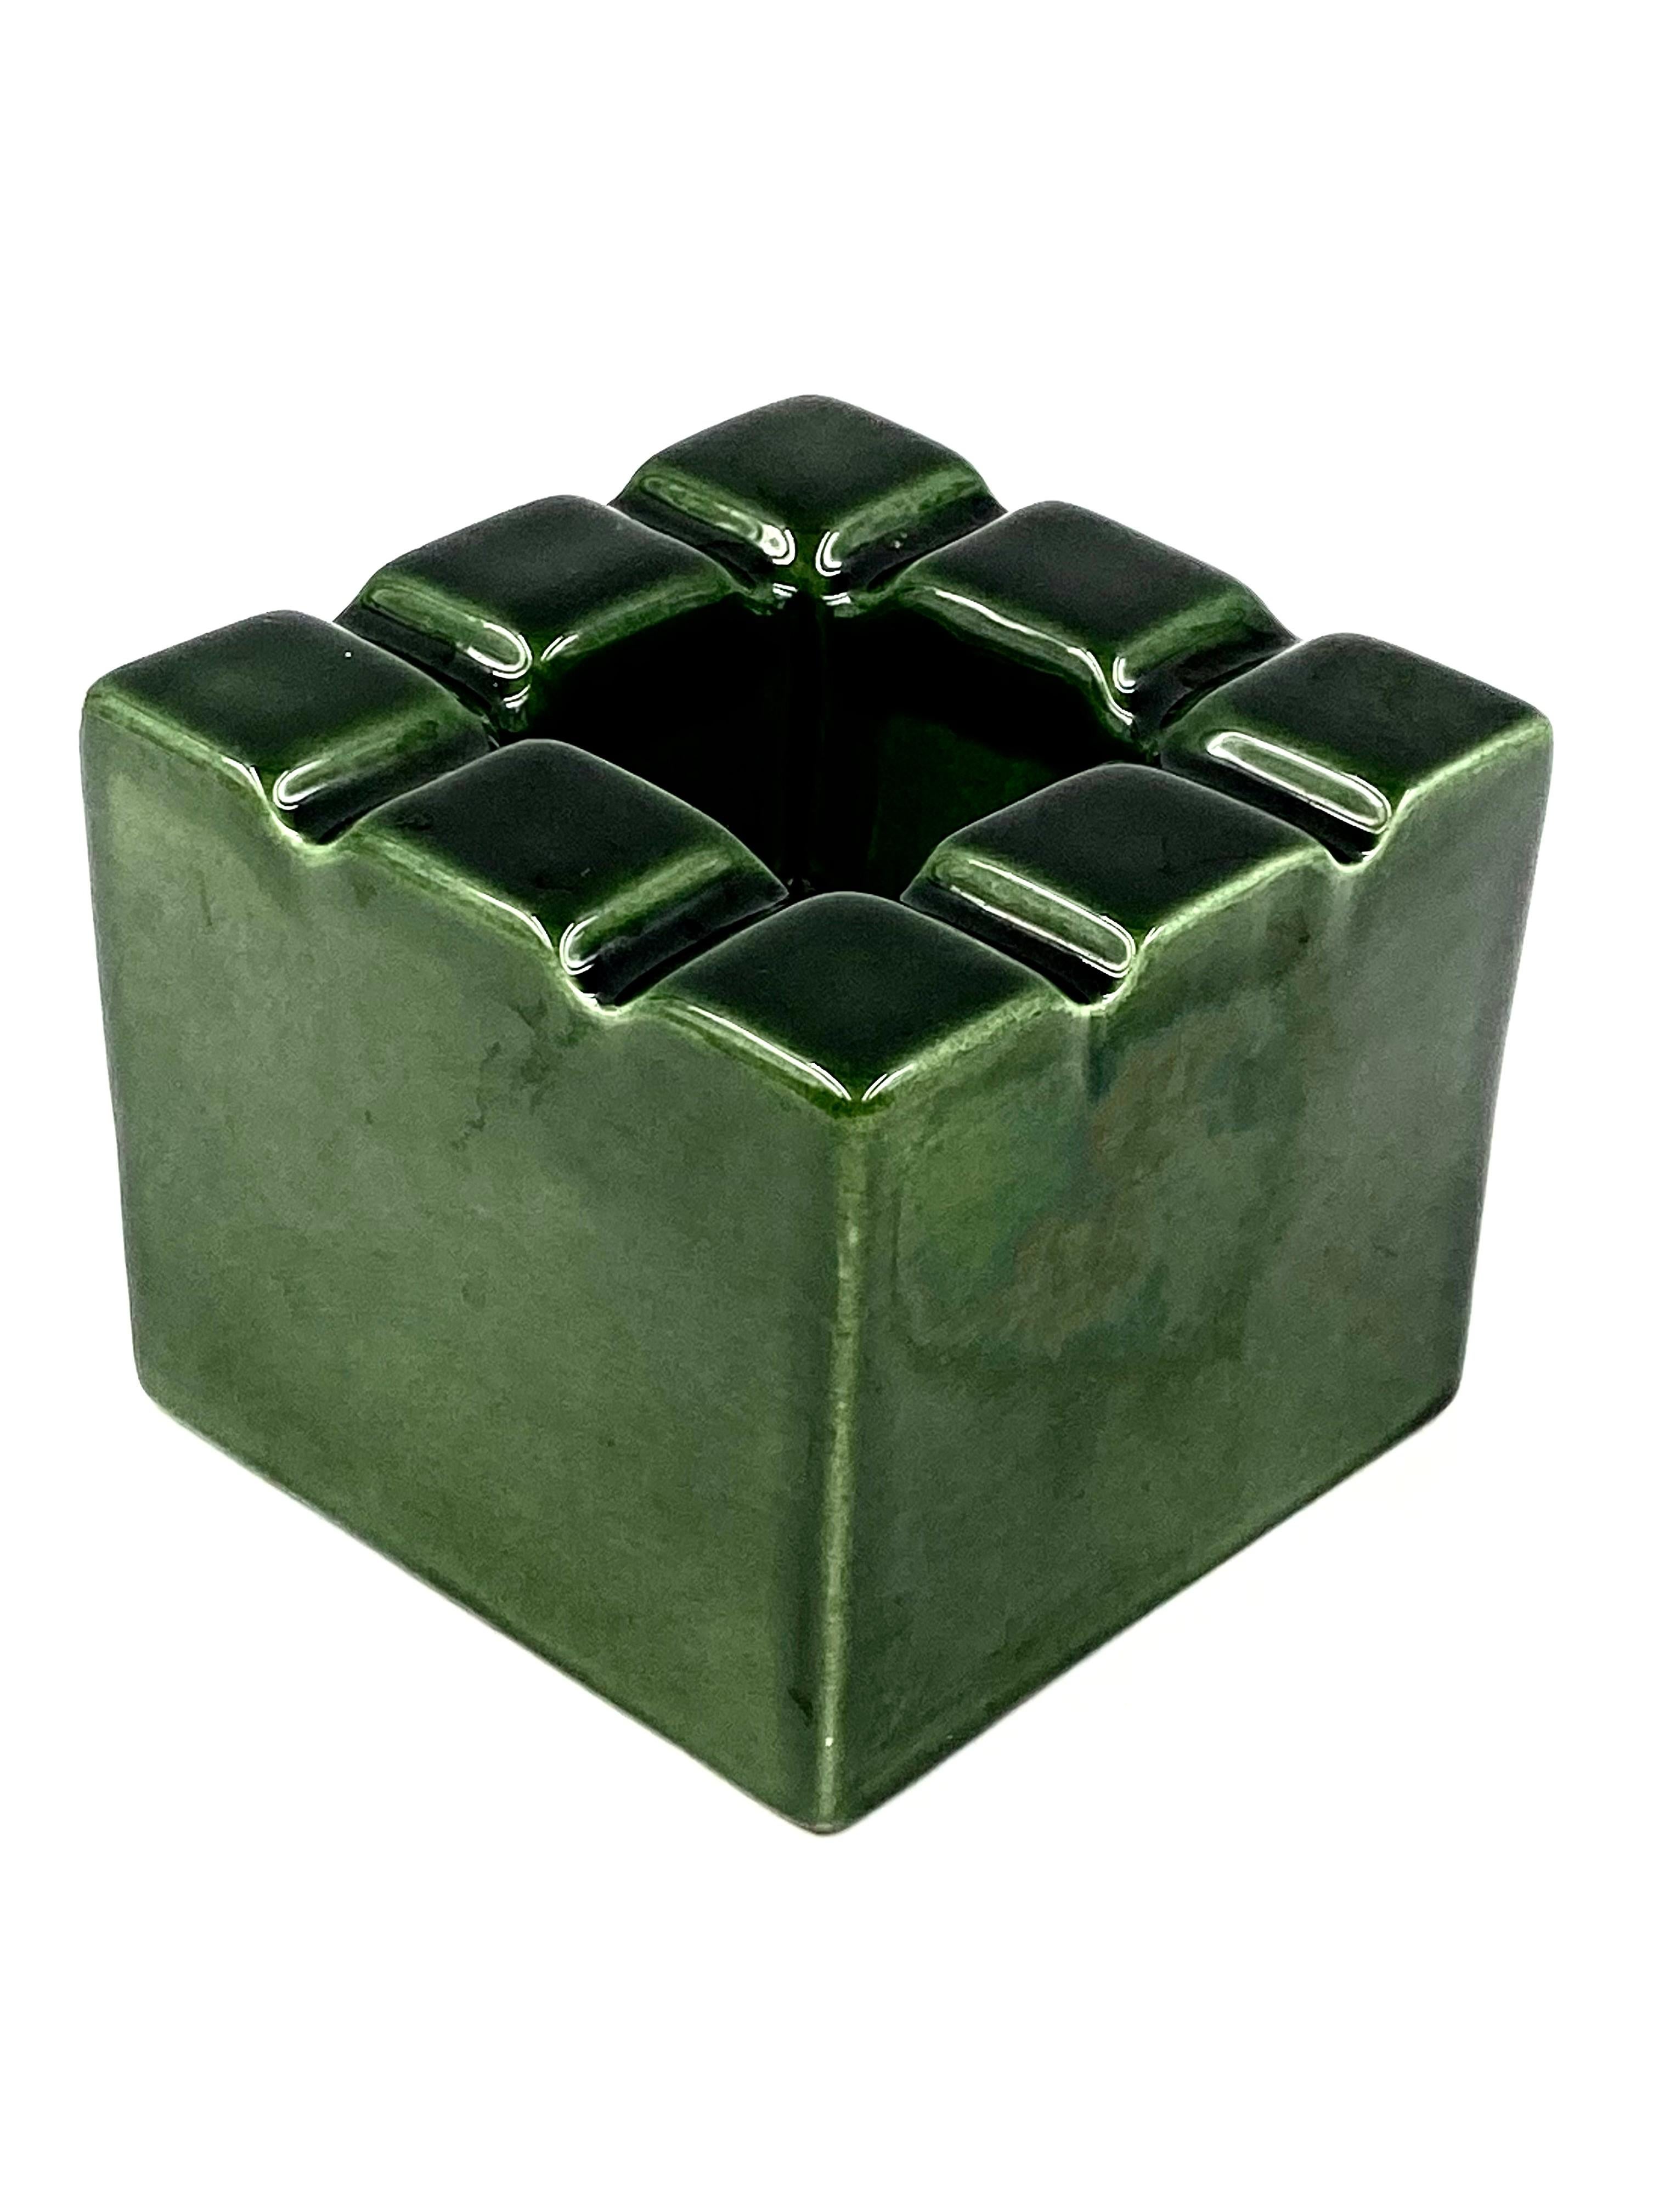 Green Cubic Glazed Ceramic Ashtray, Sicart, Italy, 1970s 6